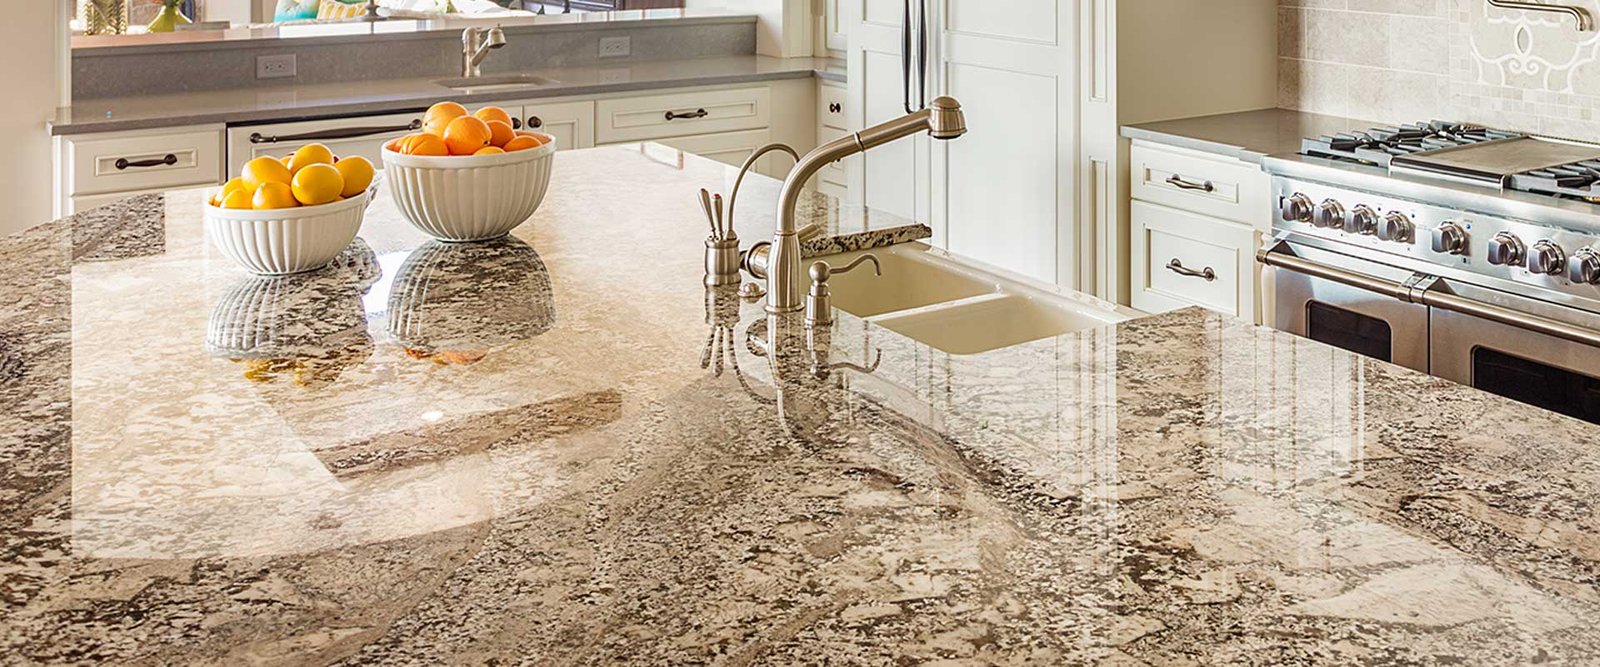 advanced-granite-solutions-kitchen-countertop-home-banner-1